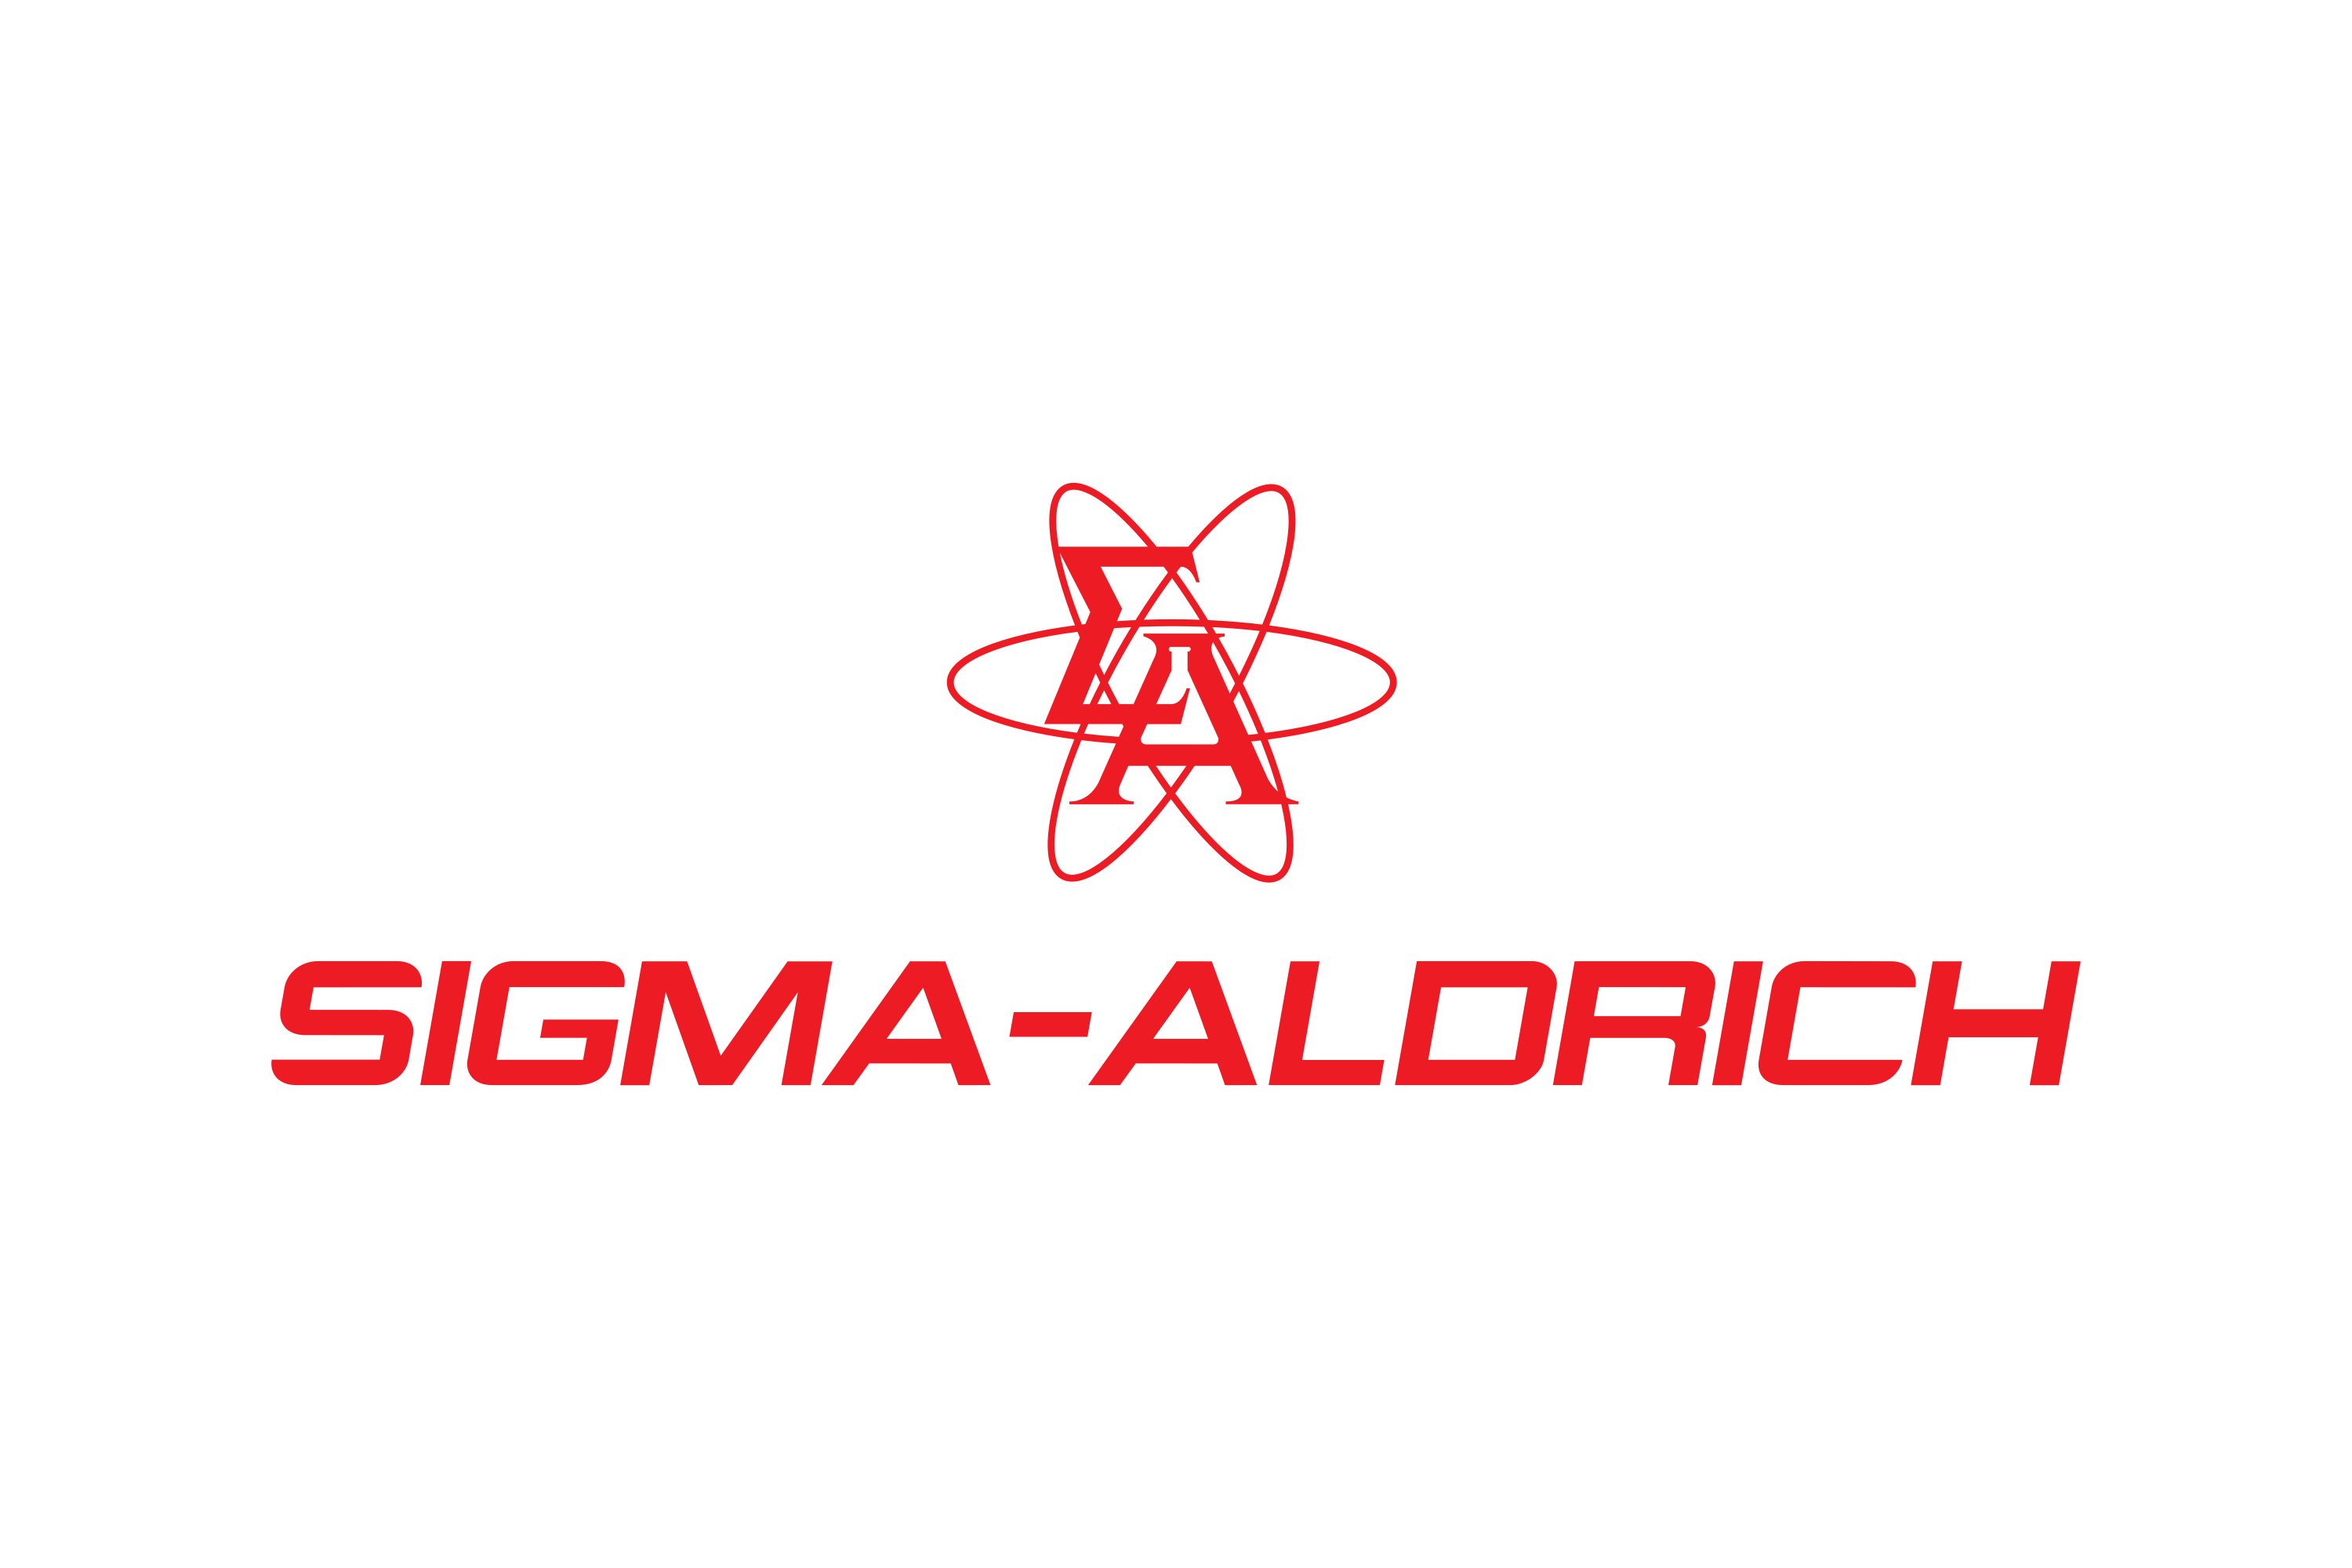 Download Sigma-Aldrich (MilliporeSigma) Logo in SVG Vector or PNG File